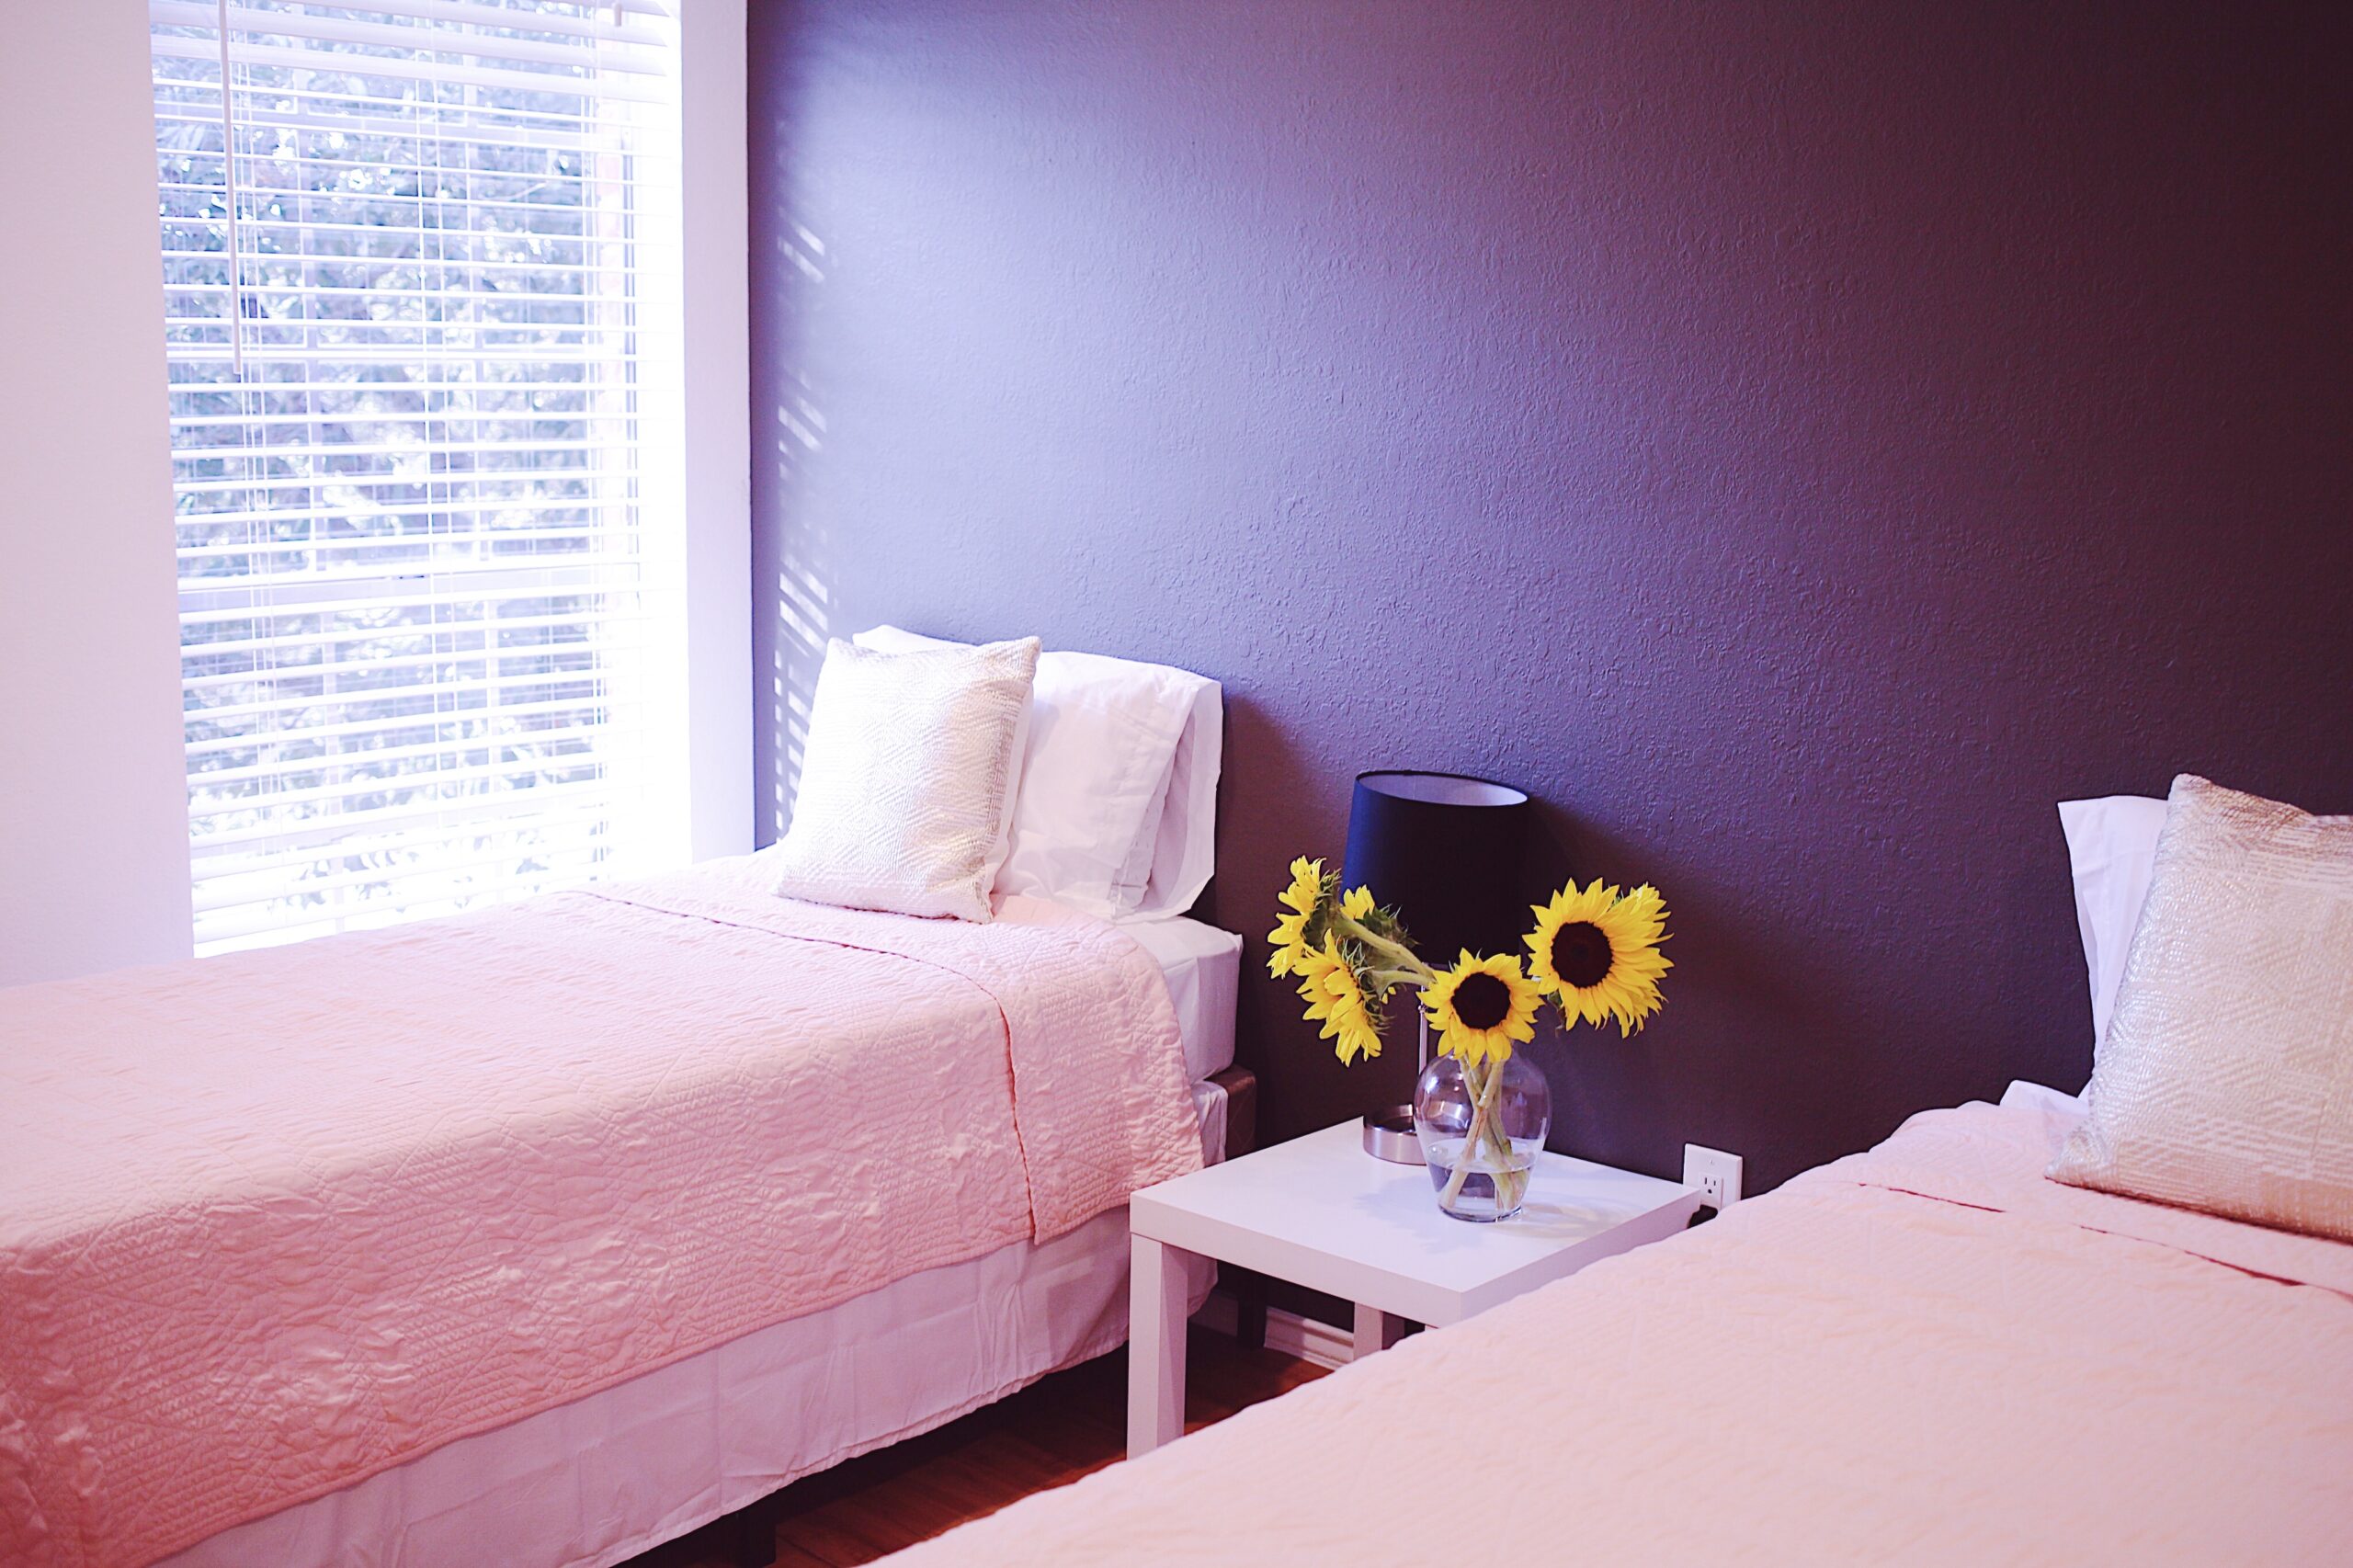 Infinite Recovery Drug rehab's bedroom